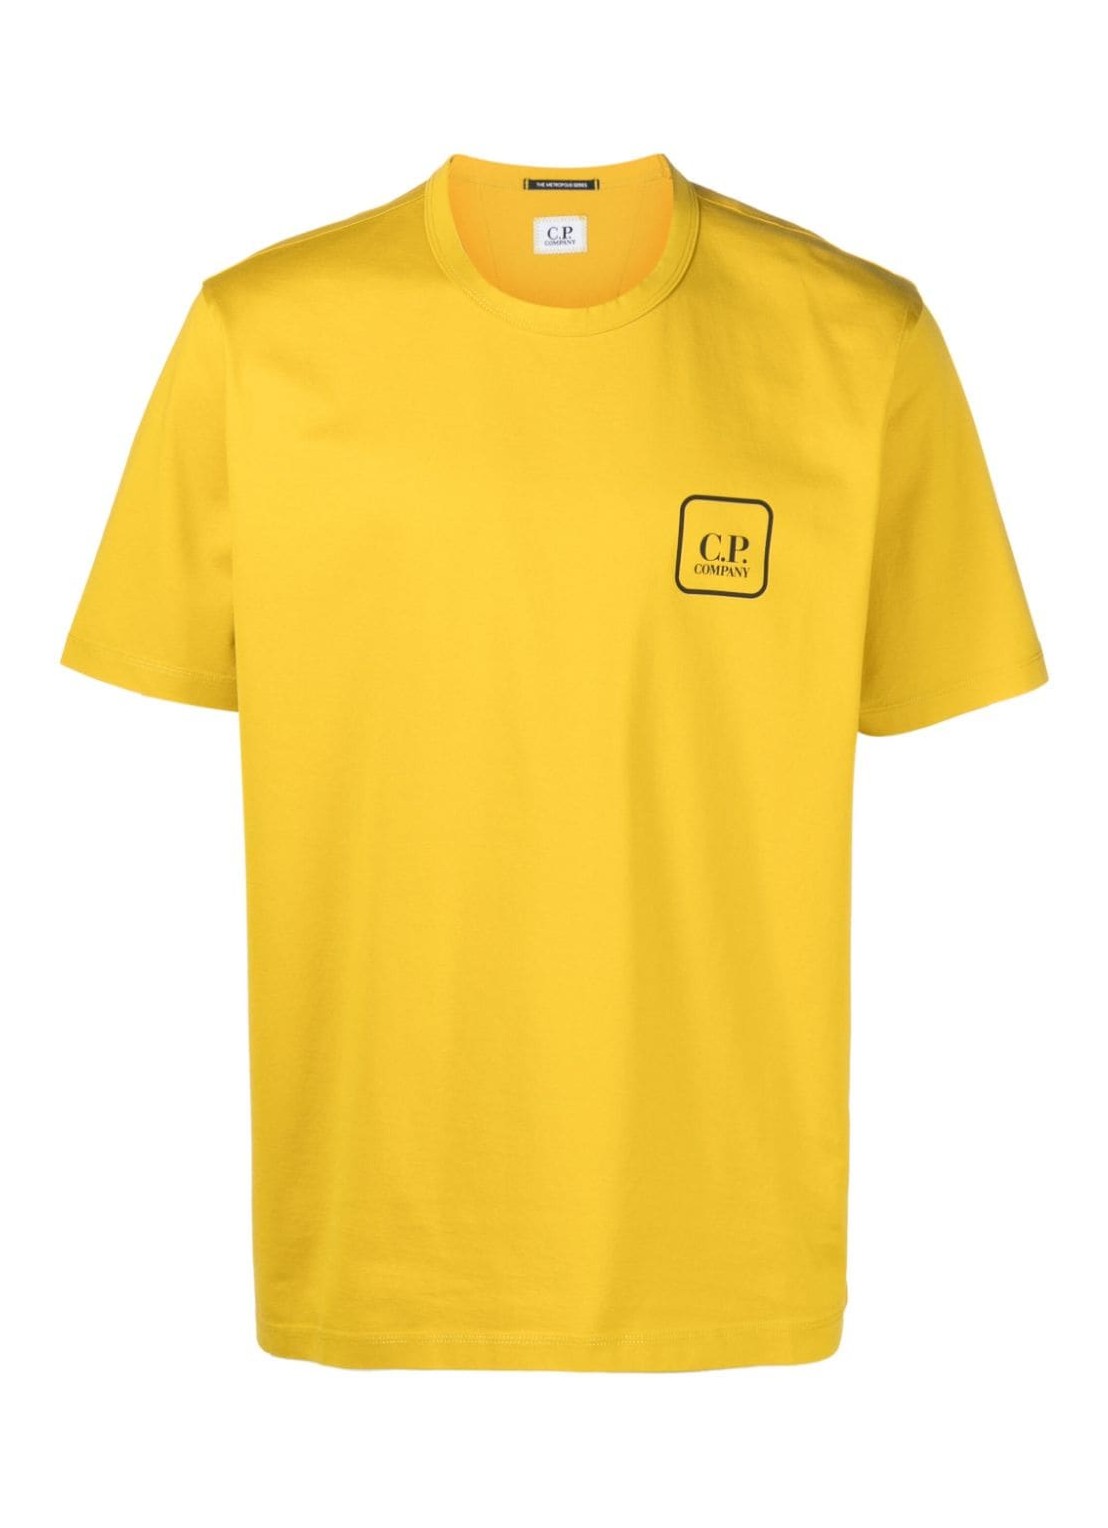 Camiseta c.p.company t-shirt man metropolis series mercerized jersey logo graphic t-shirt 16clts046a